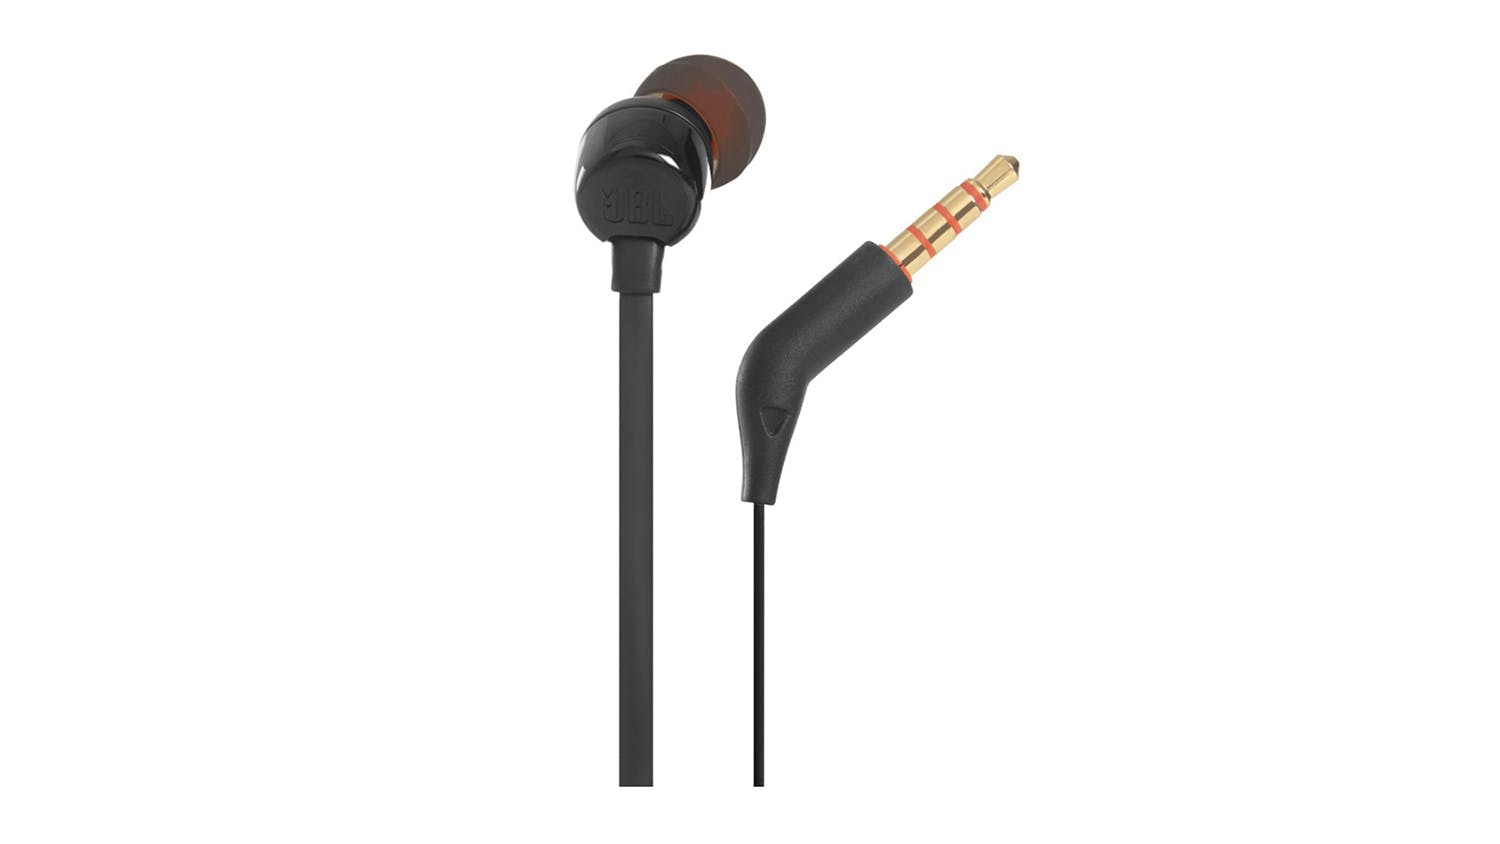 JBL TUNE 110 Wired In-Ear Headphones - Black